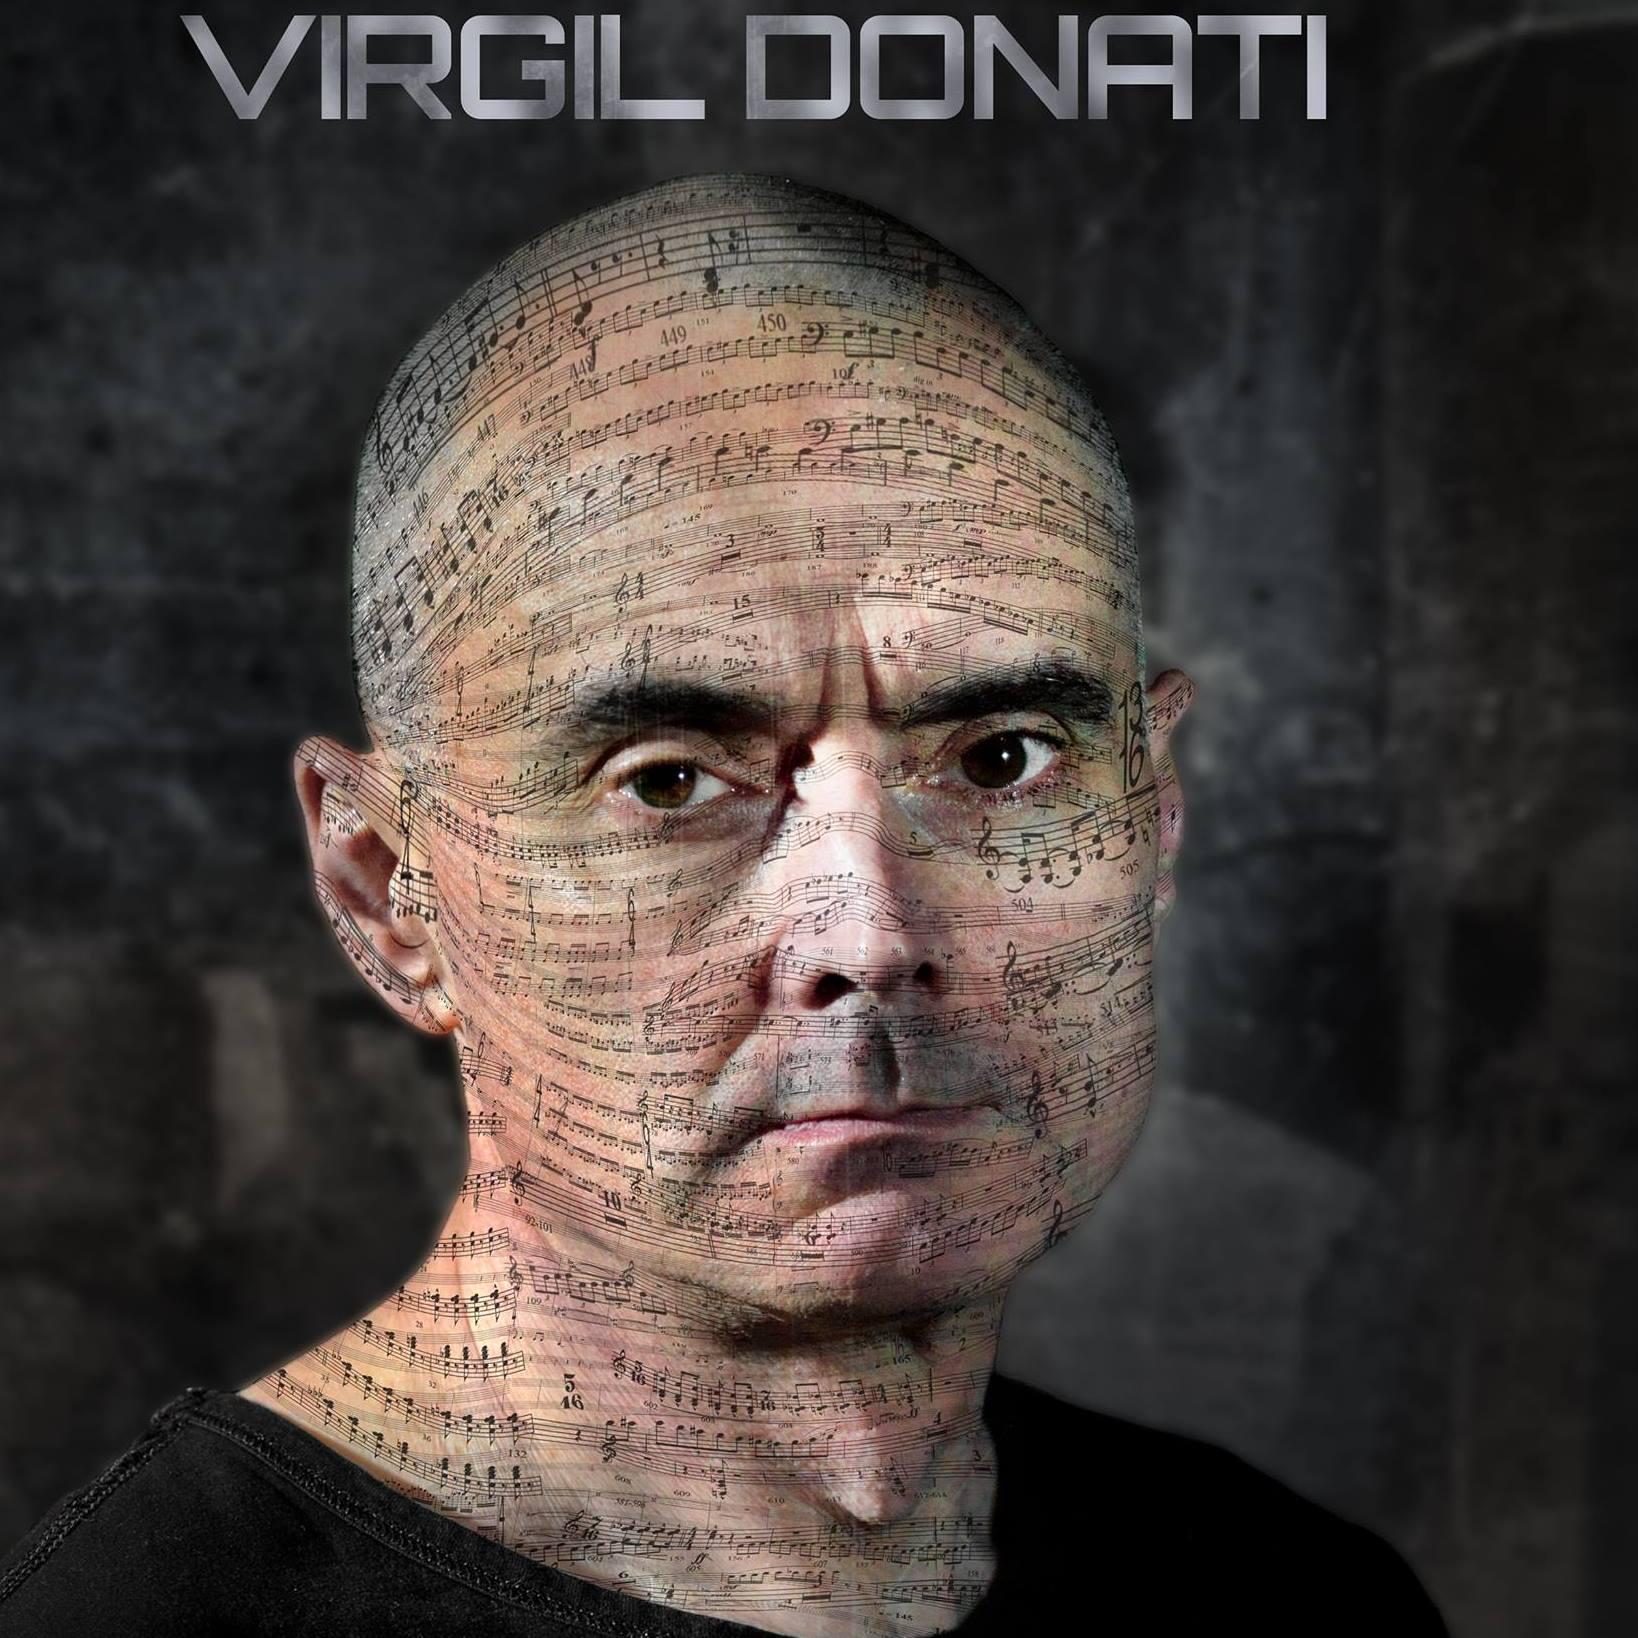 Virgil Donati